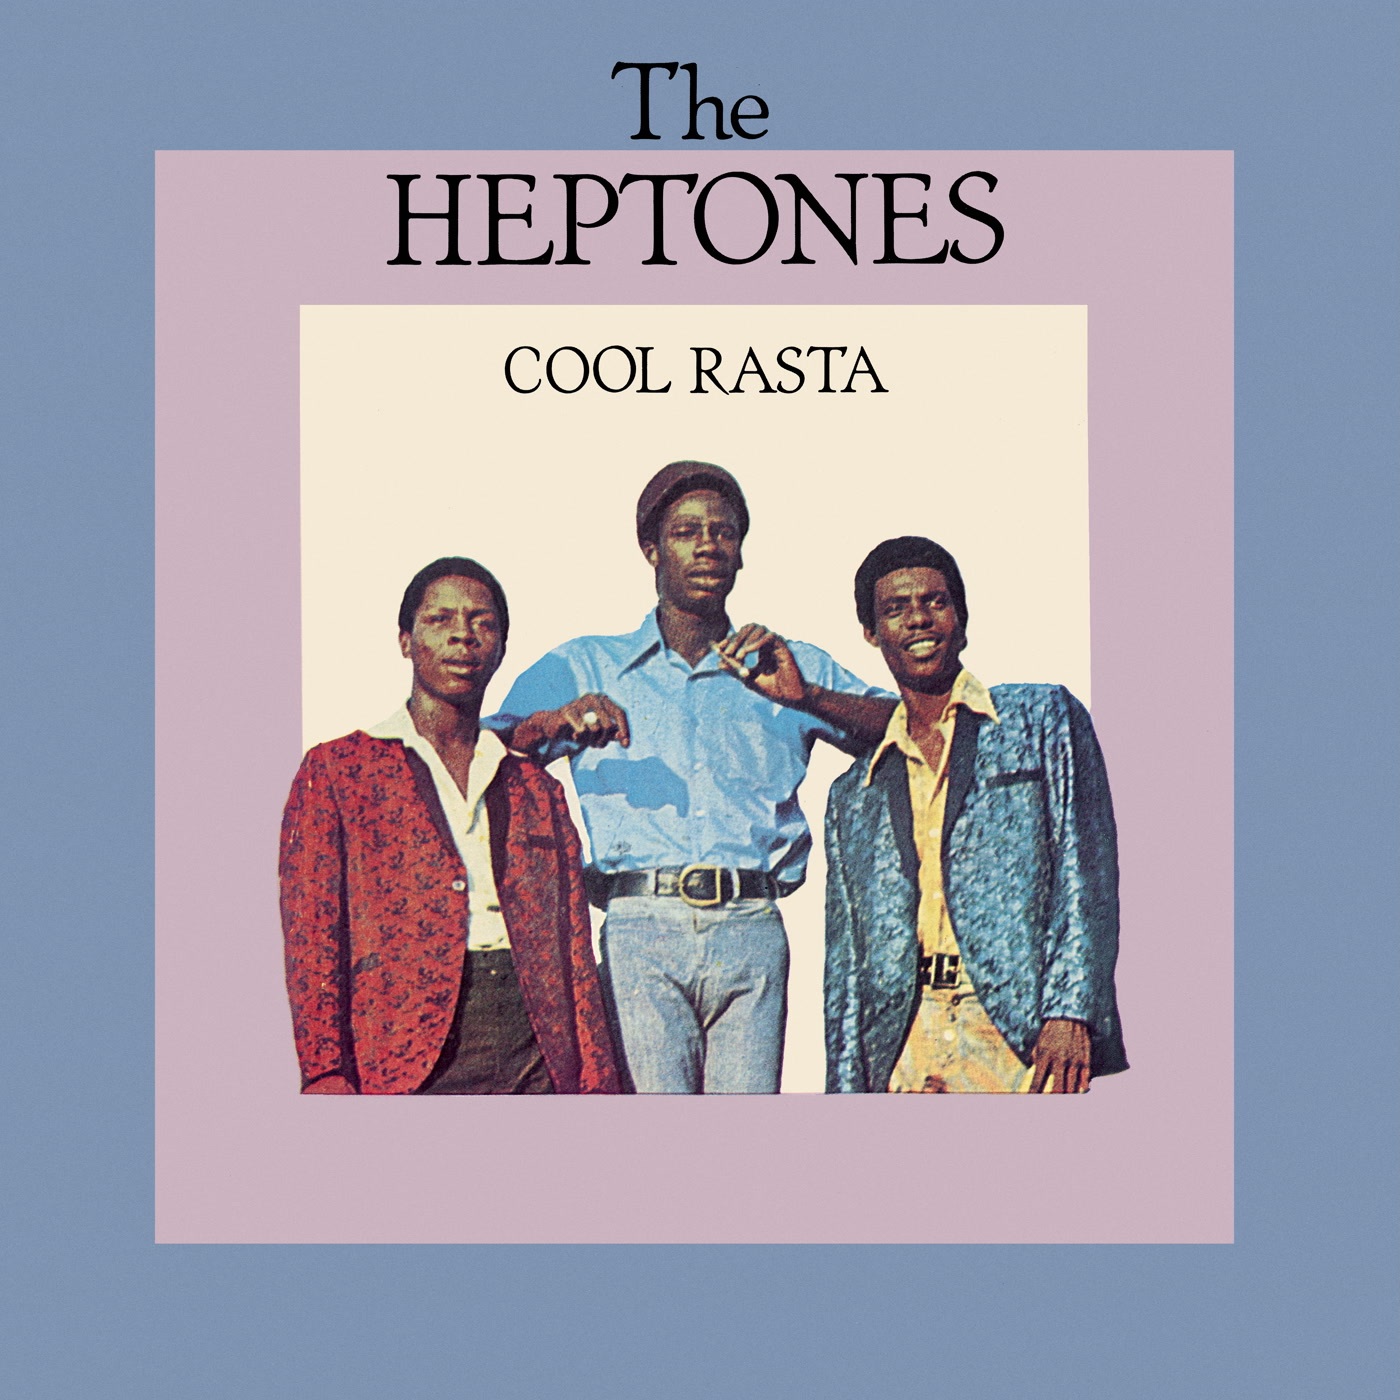 The Heptones - Cool Rasta (On High Records) - Kudos Distribution